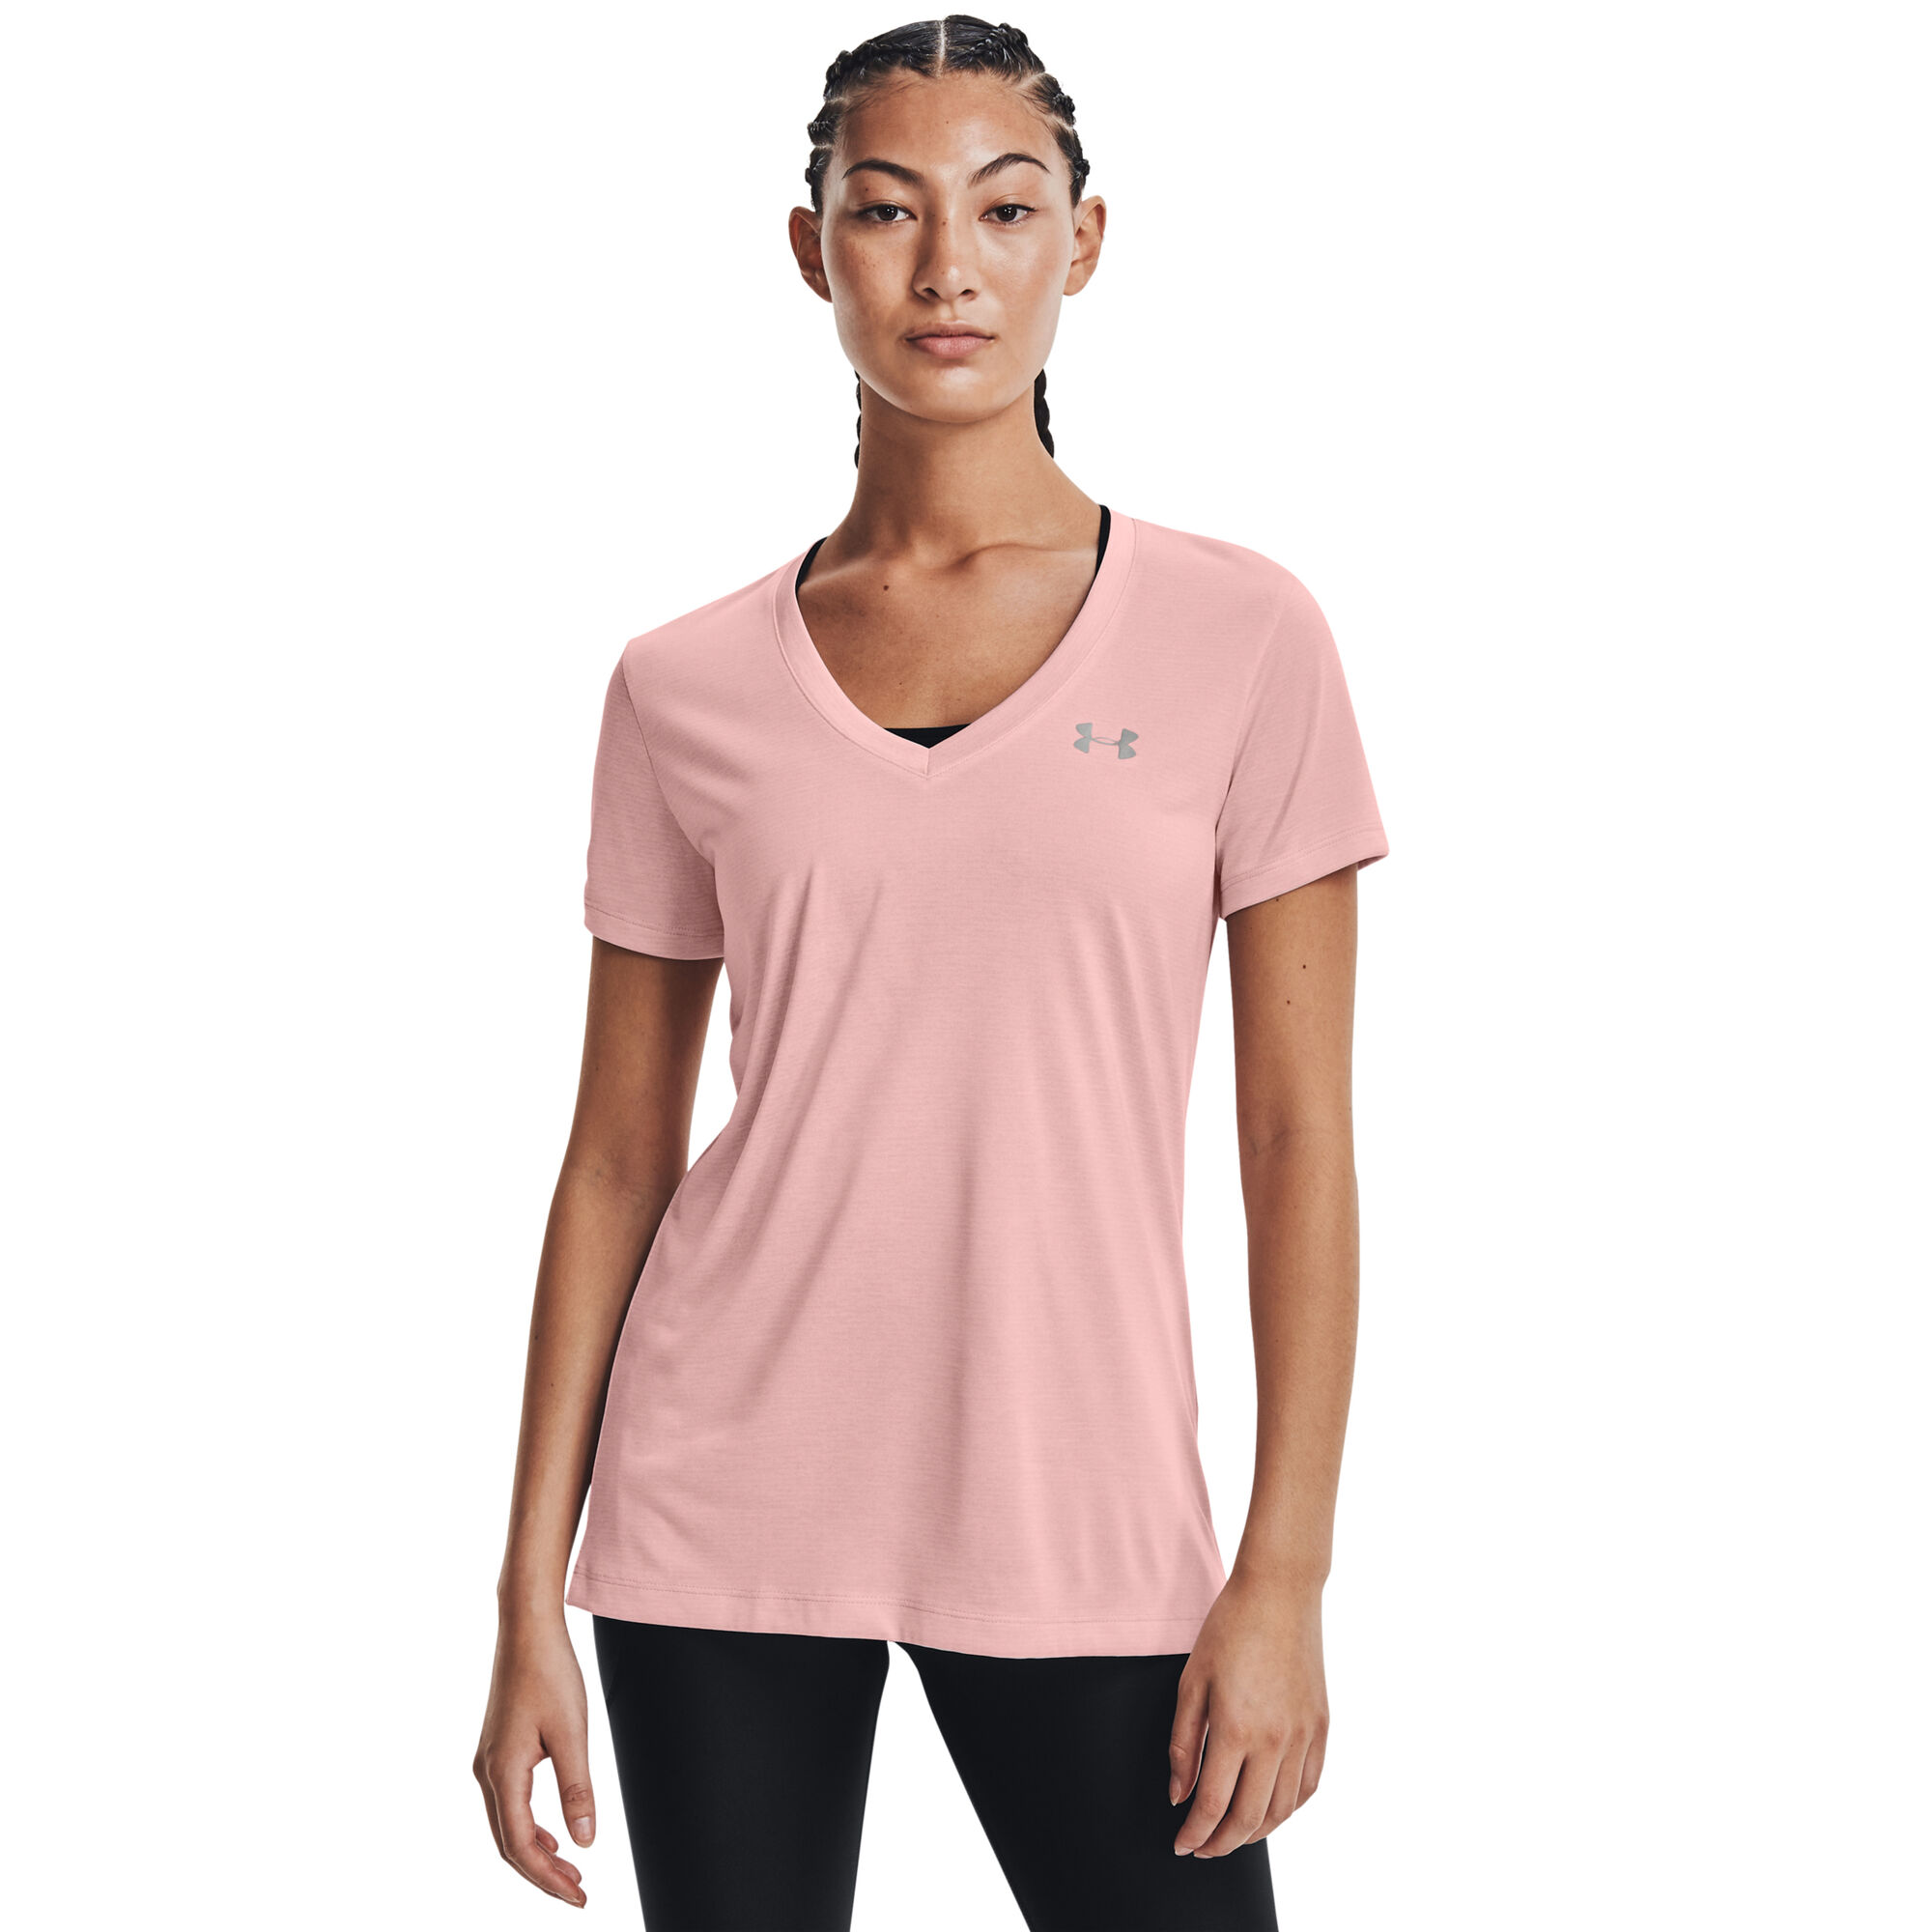 buy Under Armour Tech Twist T-Shirt Women - Pink online | Tennis-Point